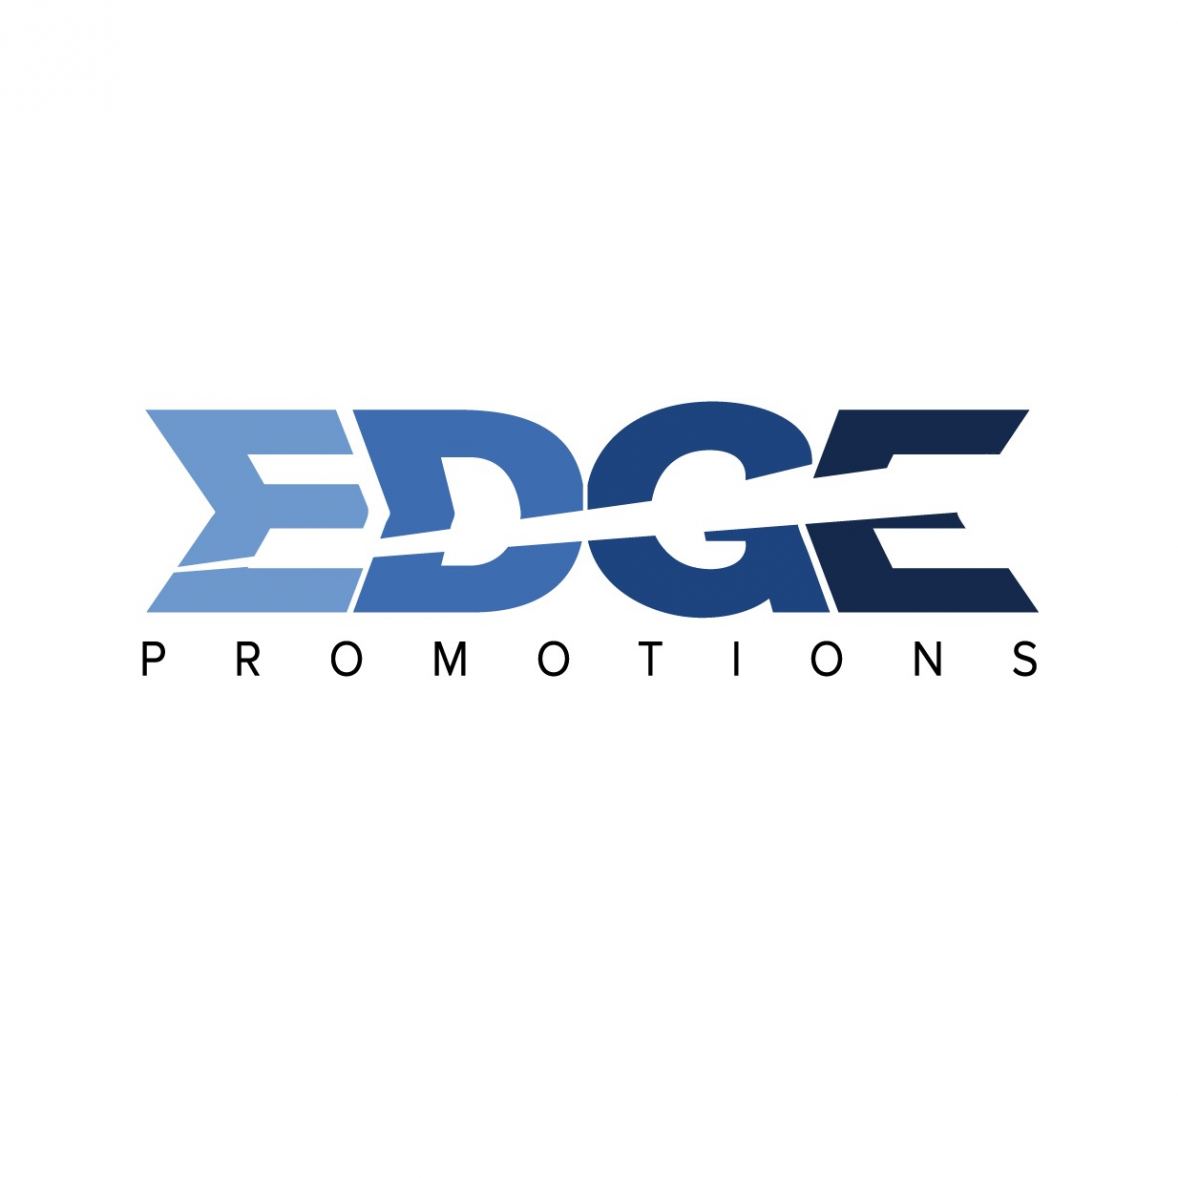 edgepromotions Logo